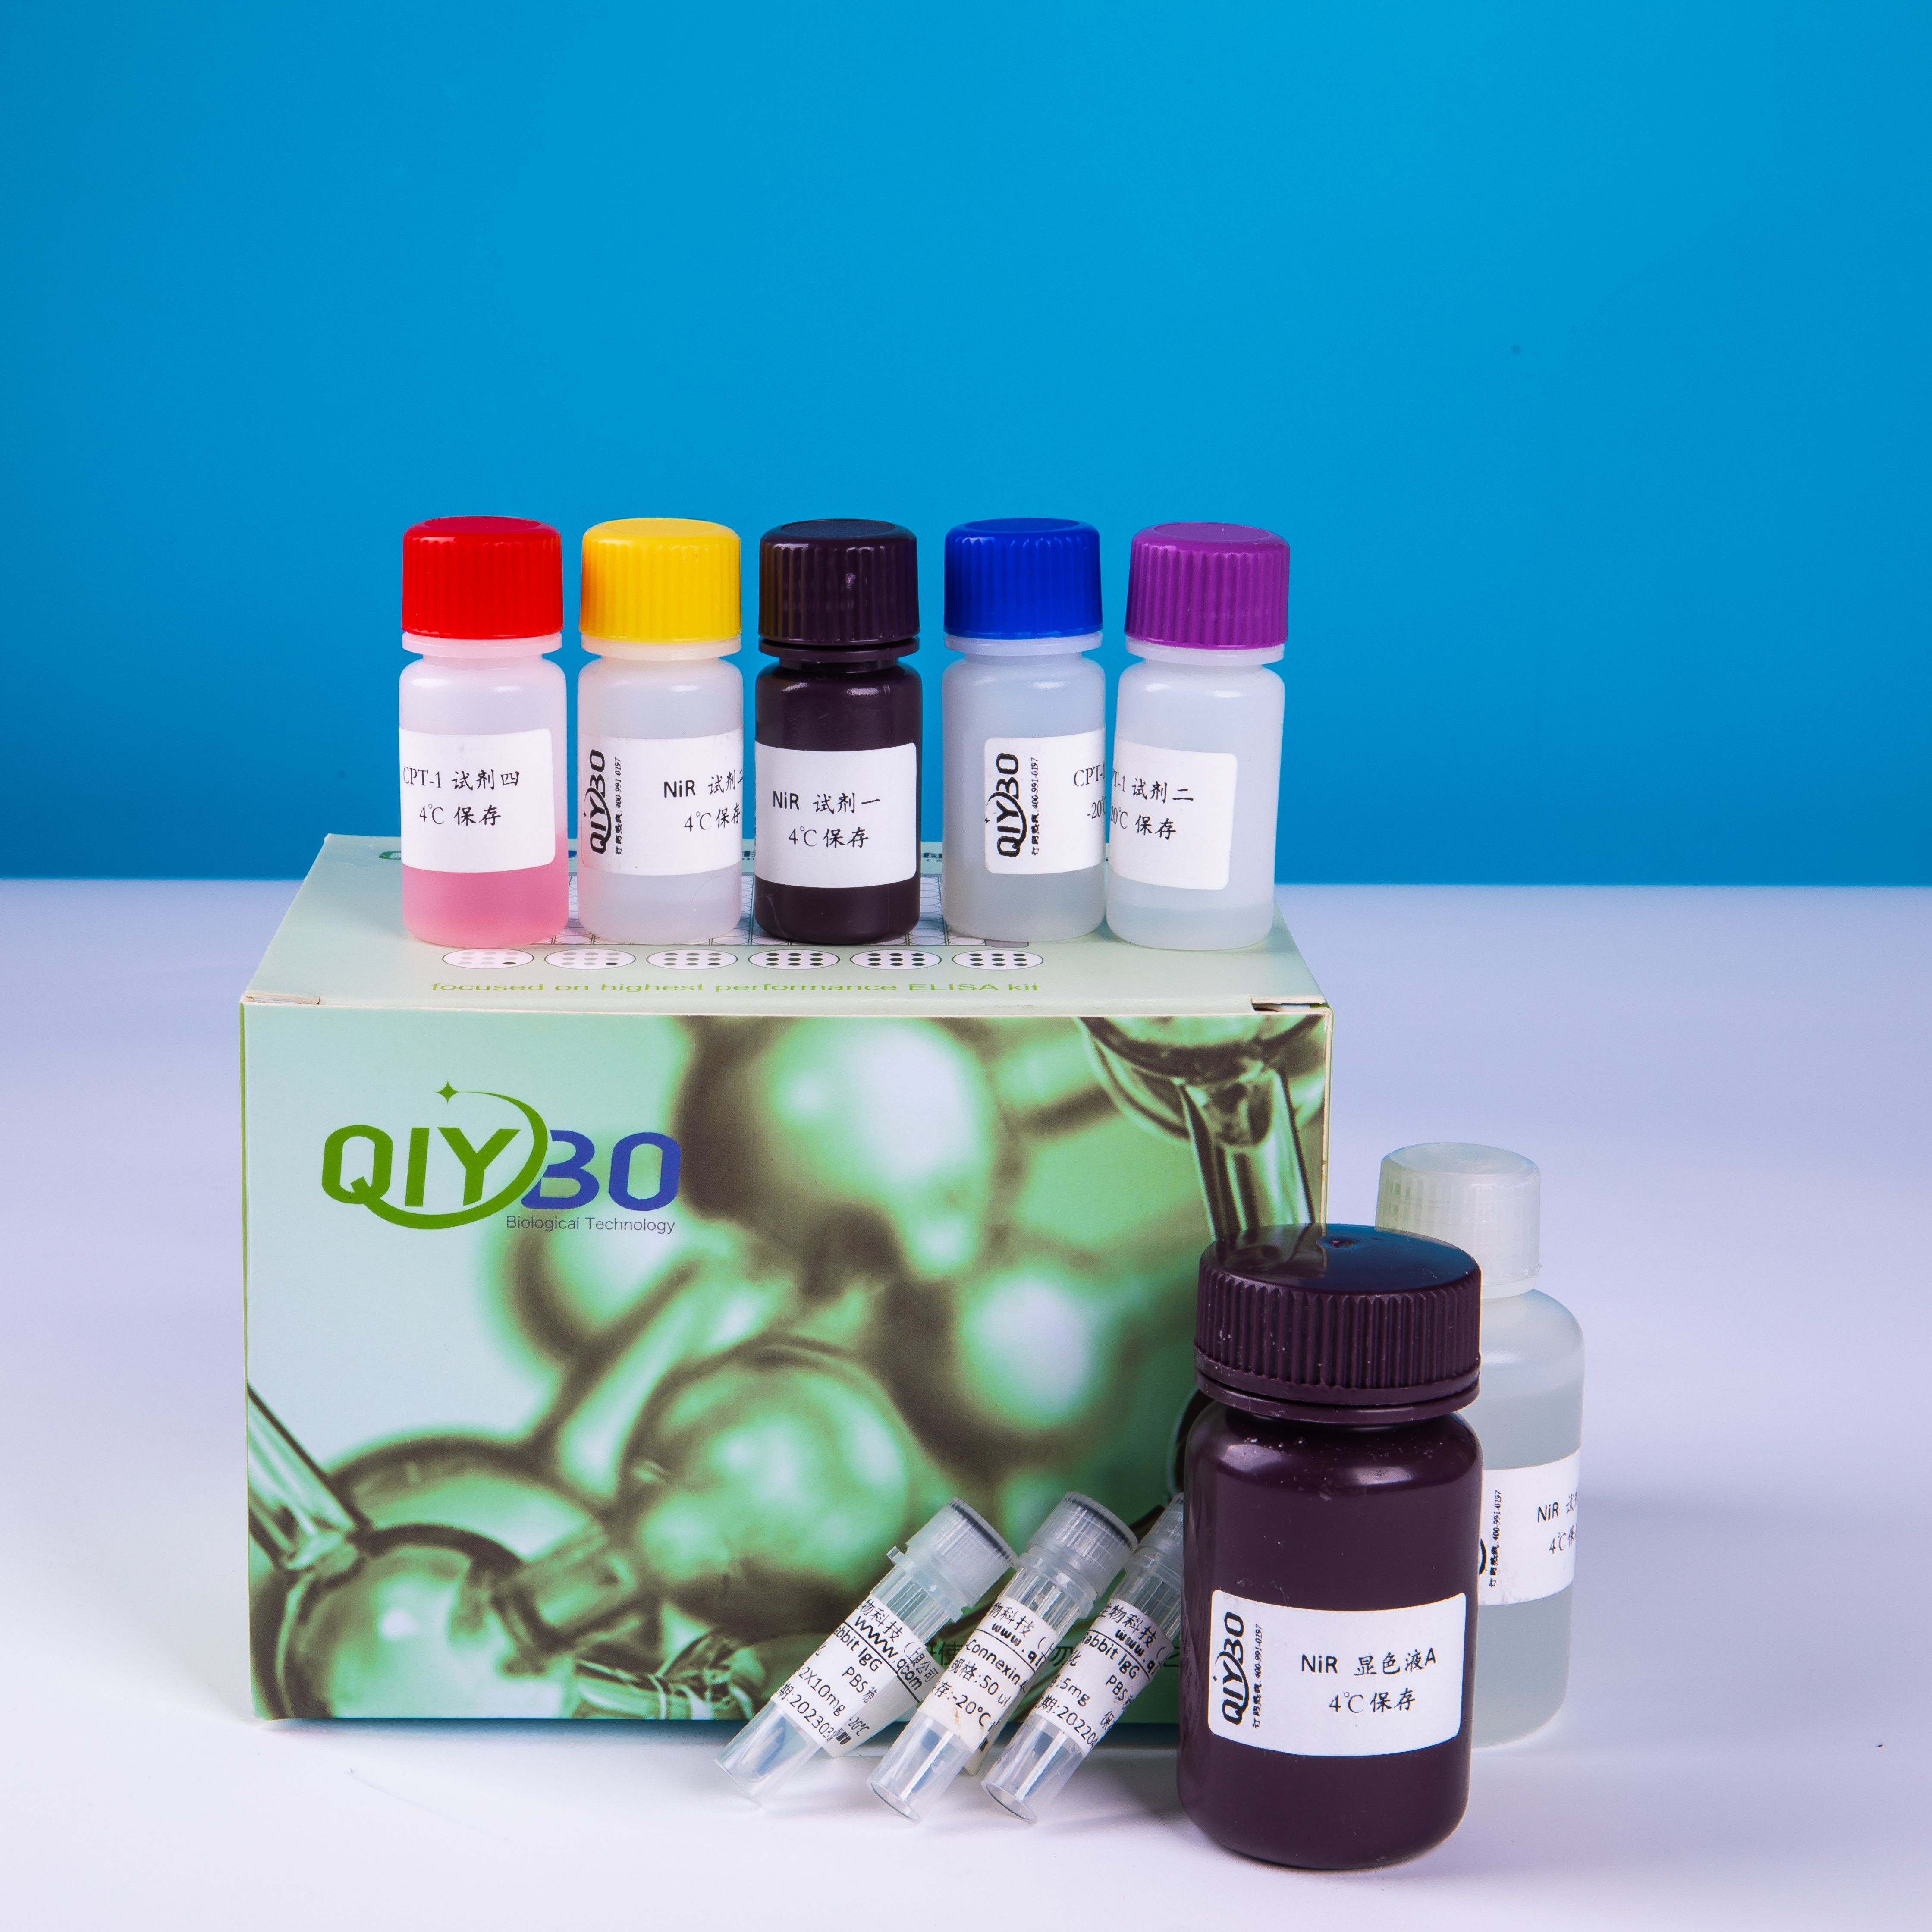 NADH-辅酶Q还原酶酶活测定试剂盒